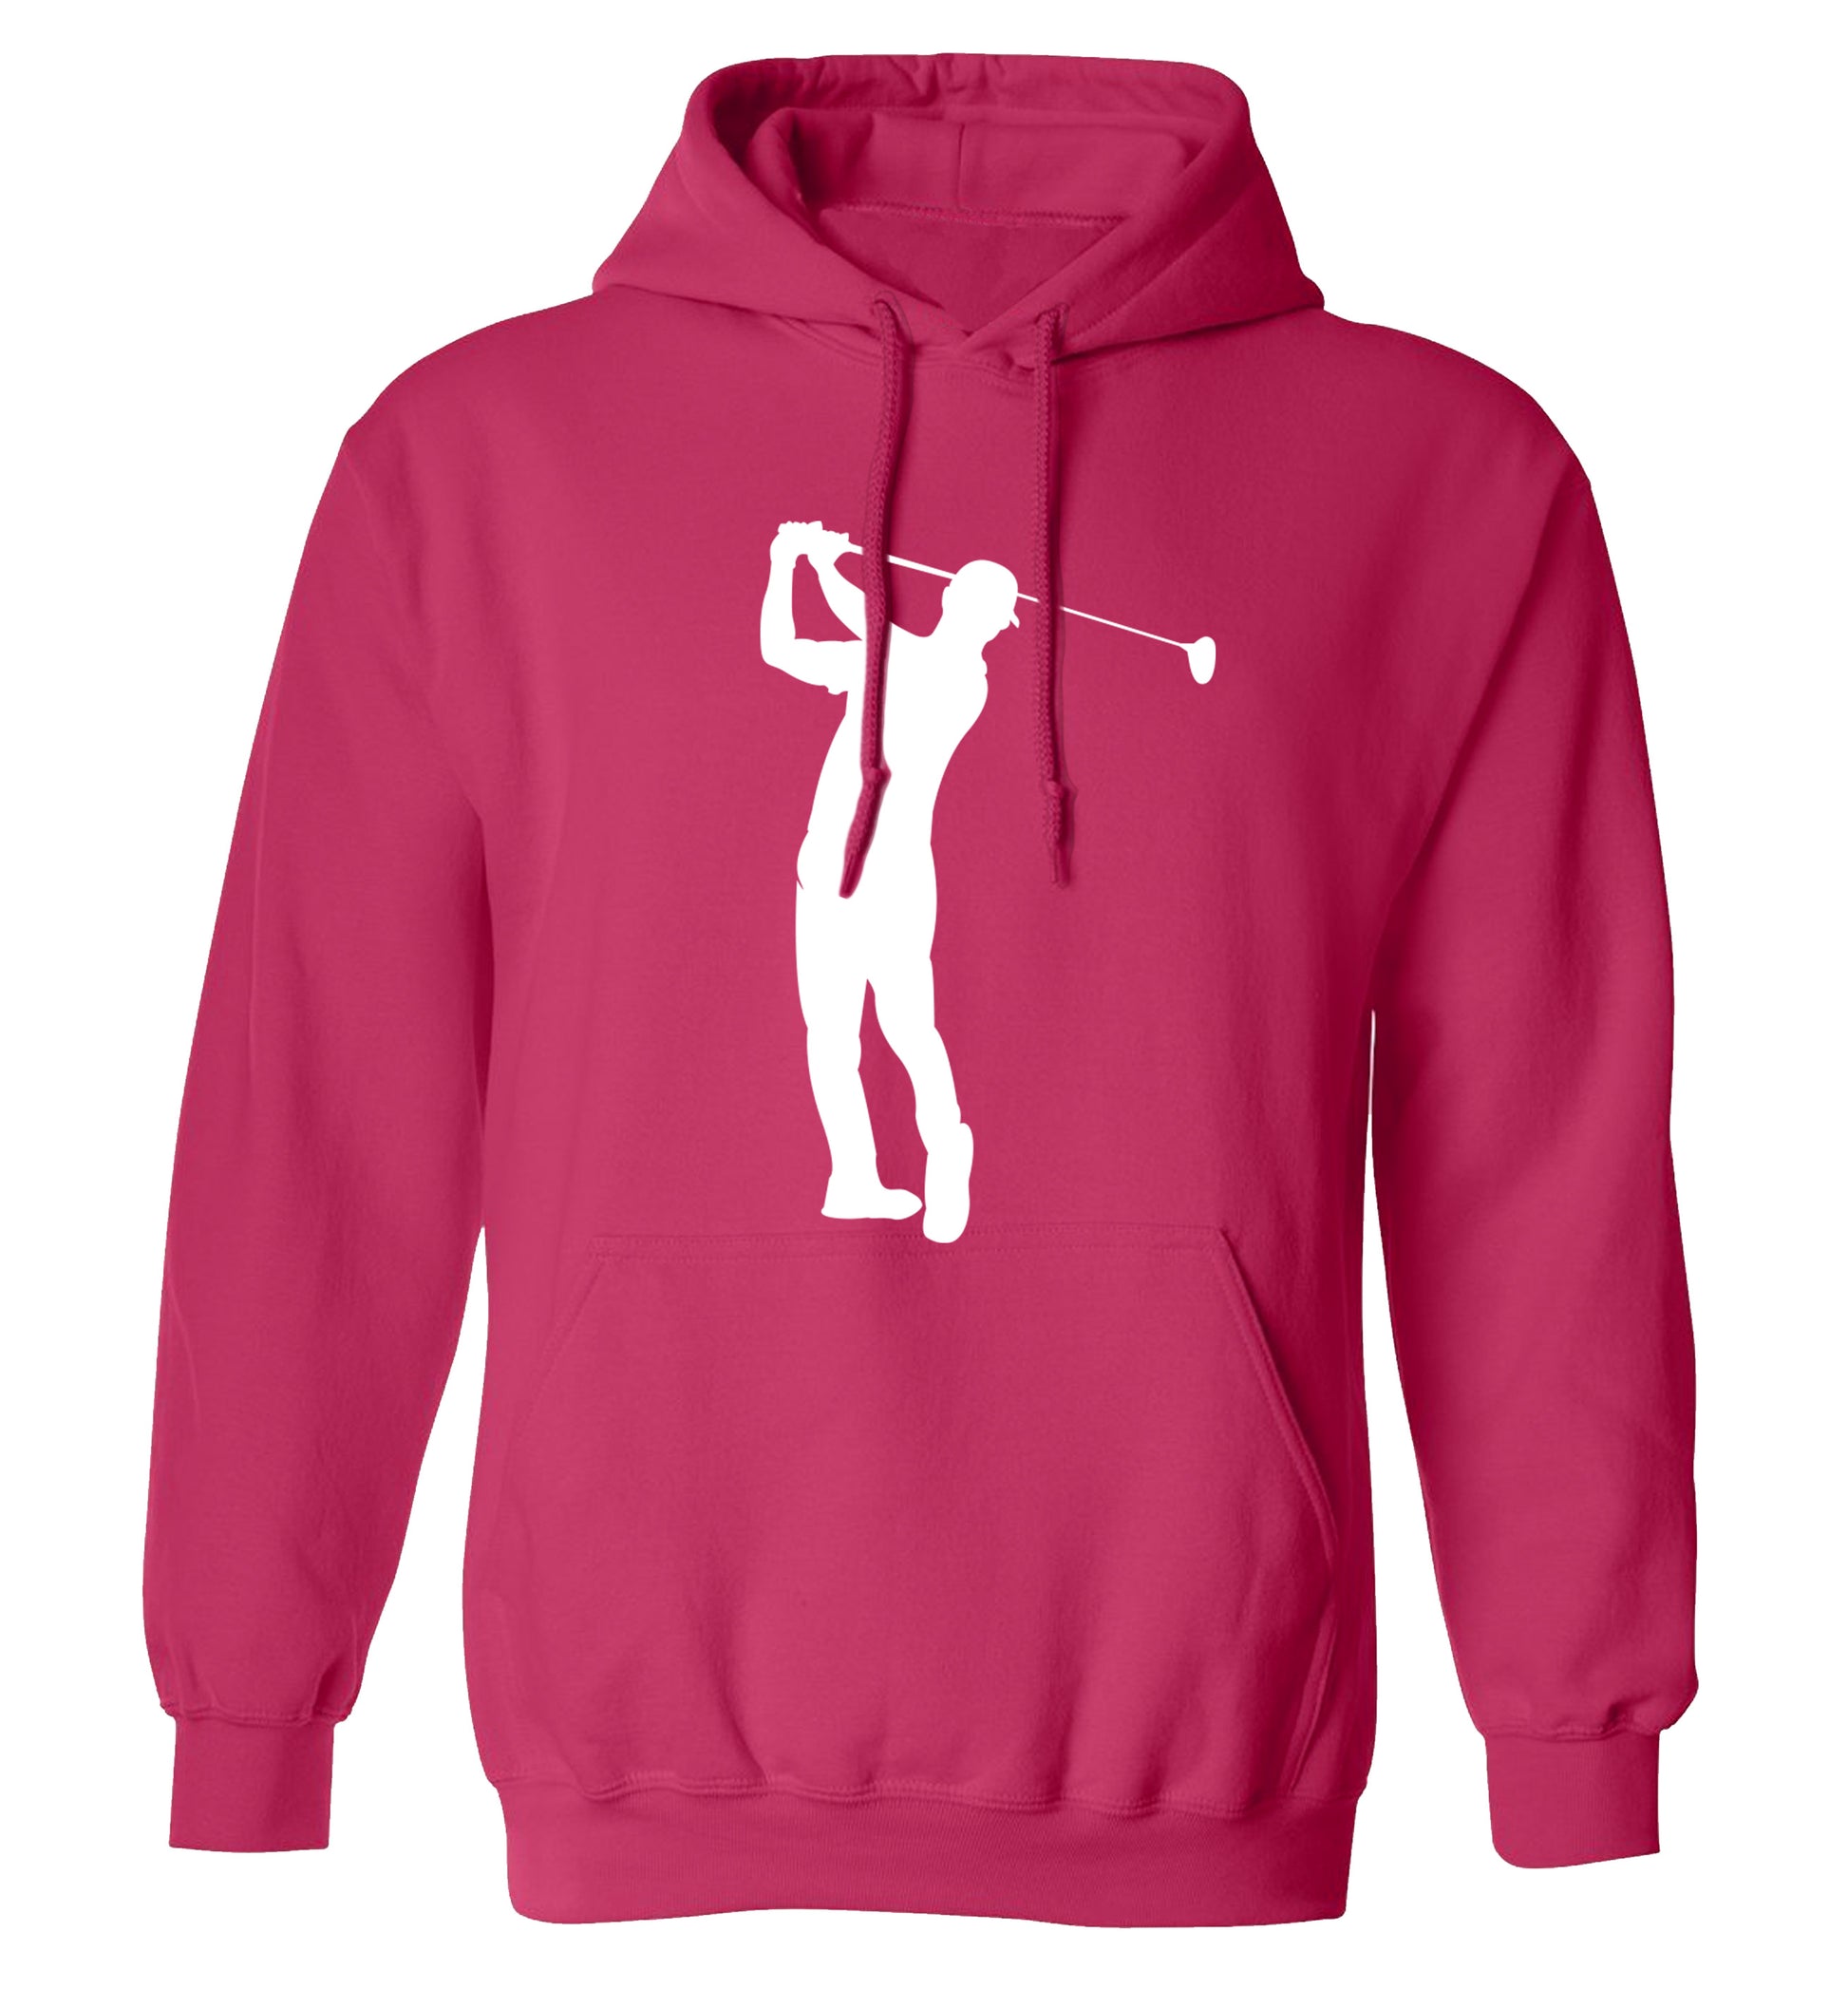 Golfer Illustration adults unisex pink hoodie 2XL